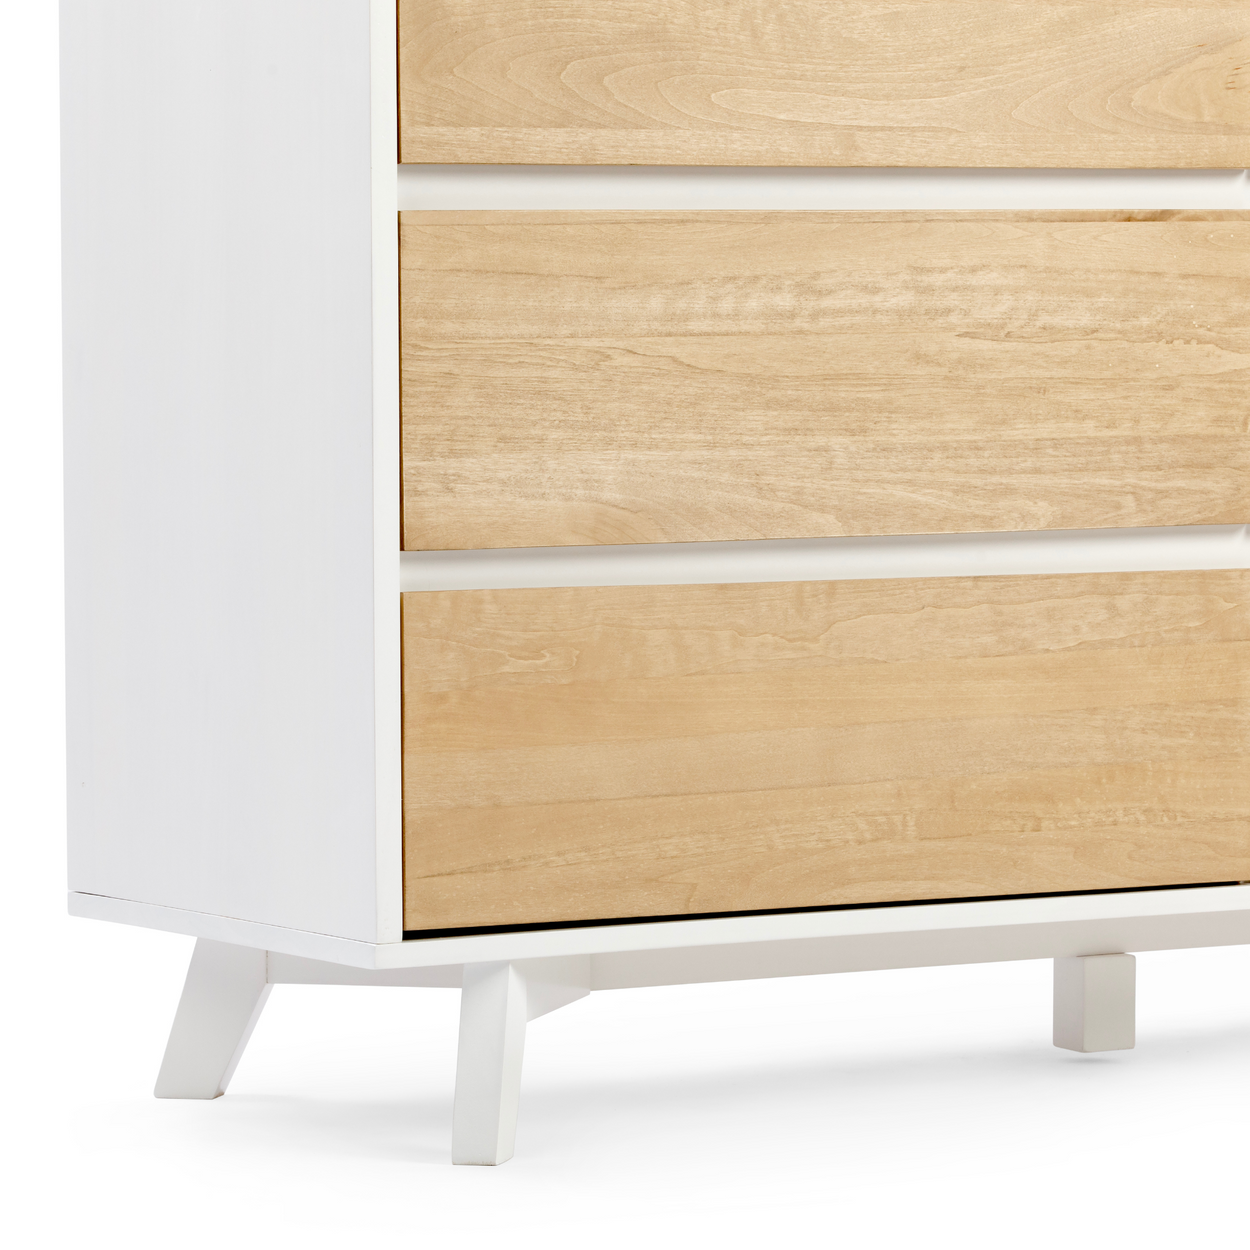 2100216000-202 : Furniture Scandinavian 6 Drawer Dresser, White/Blonde